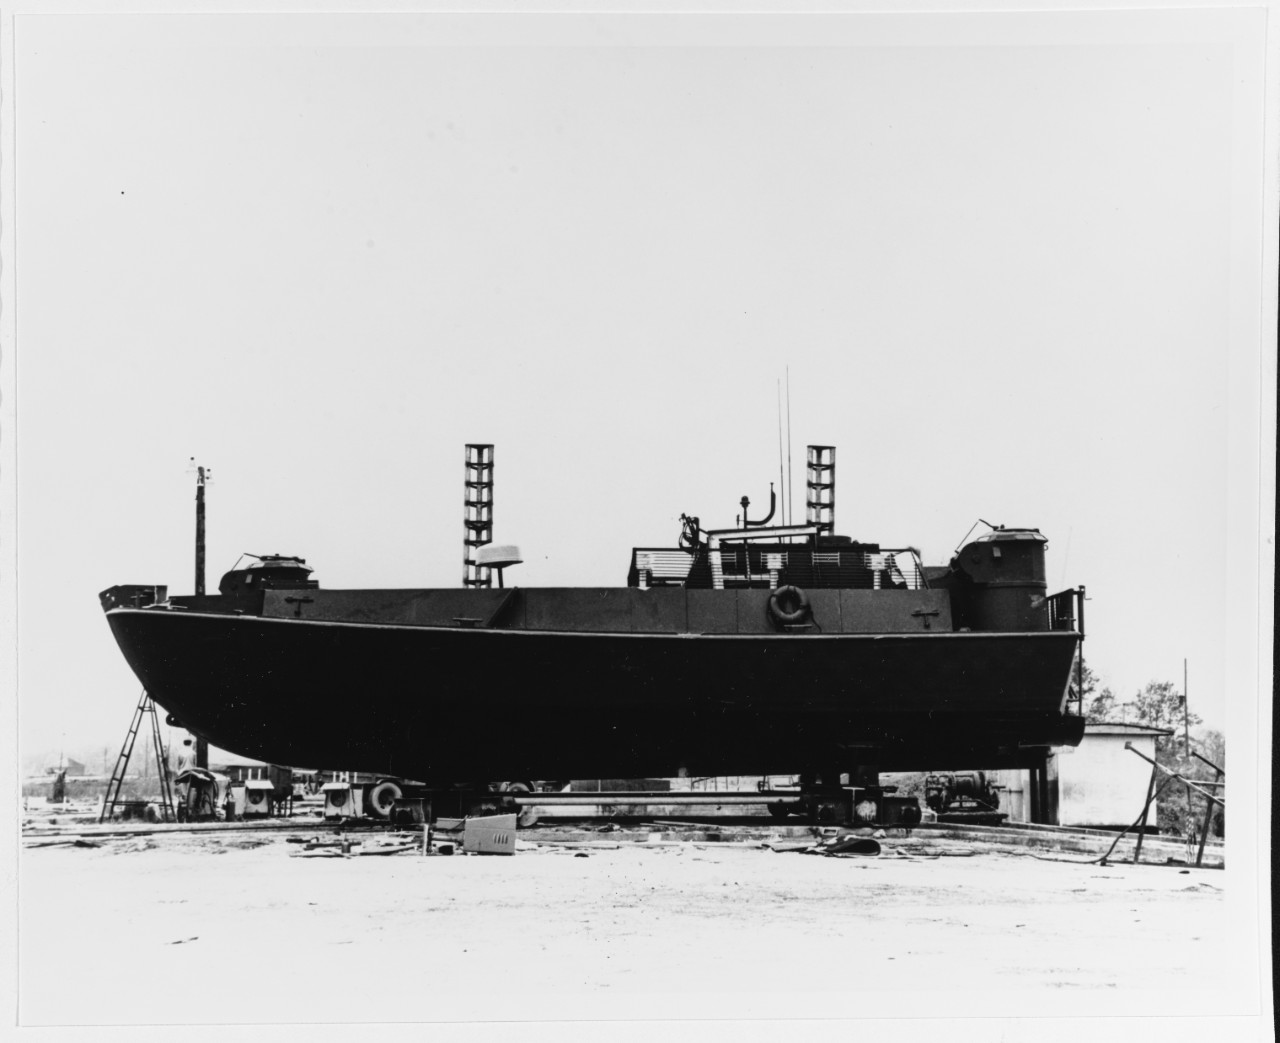 Command and Communications boat, Mark II